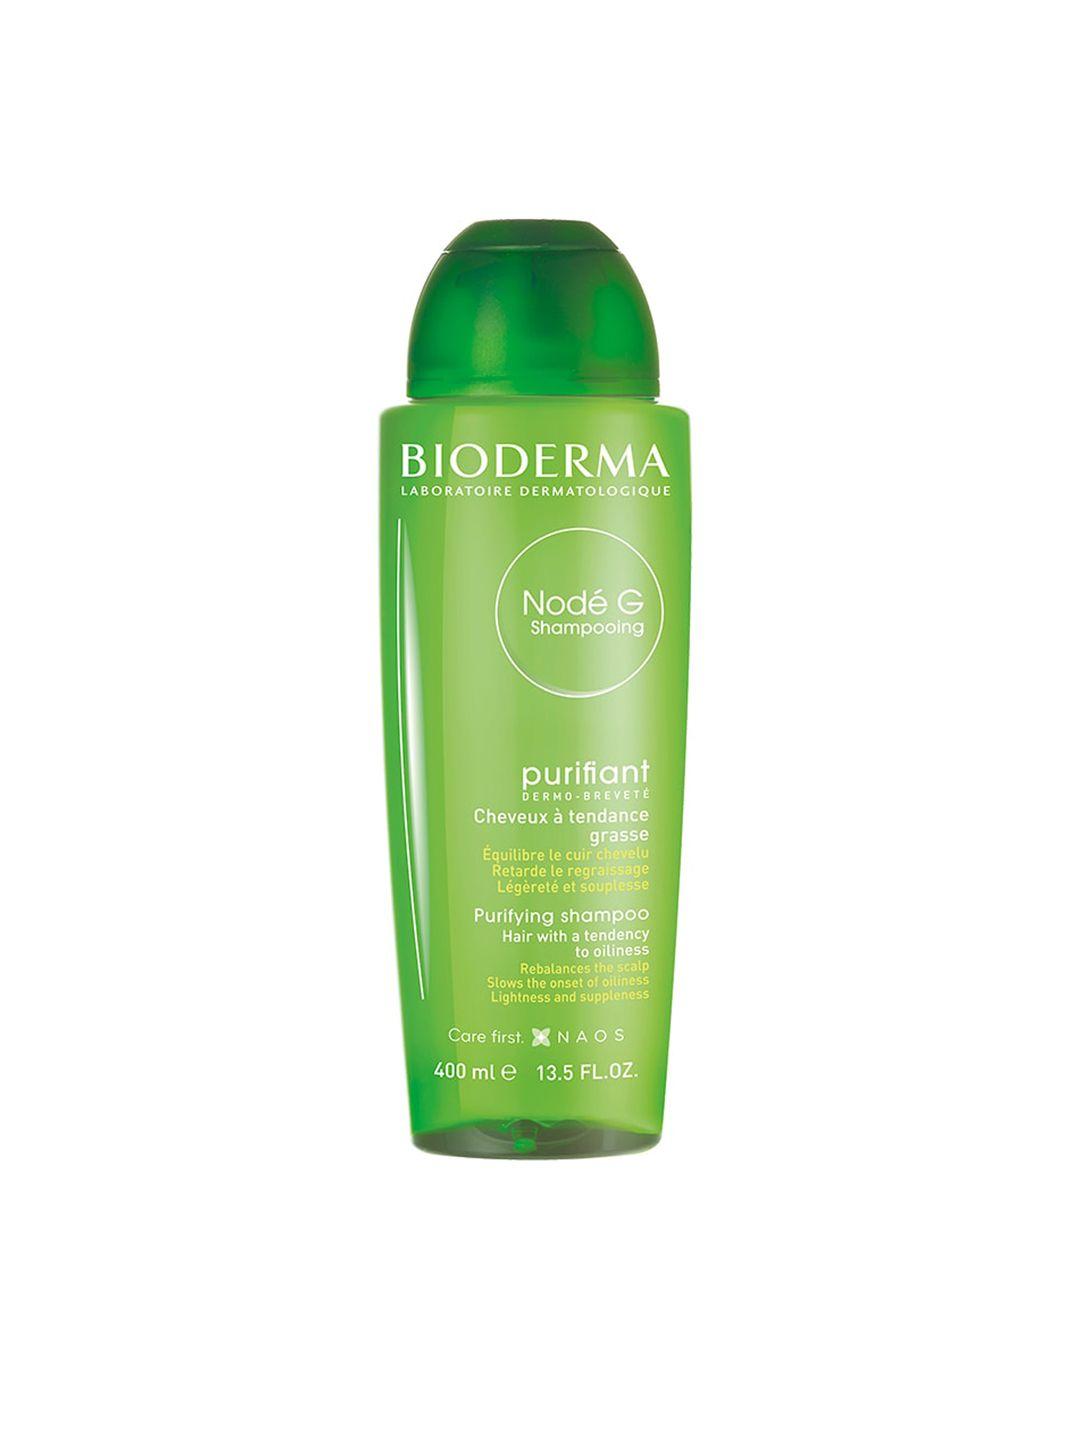 bioderma-node-g-purifying-shampoo-400ml